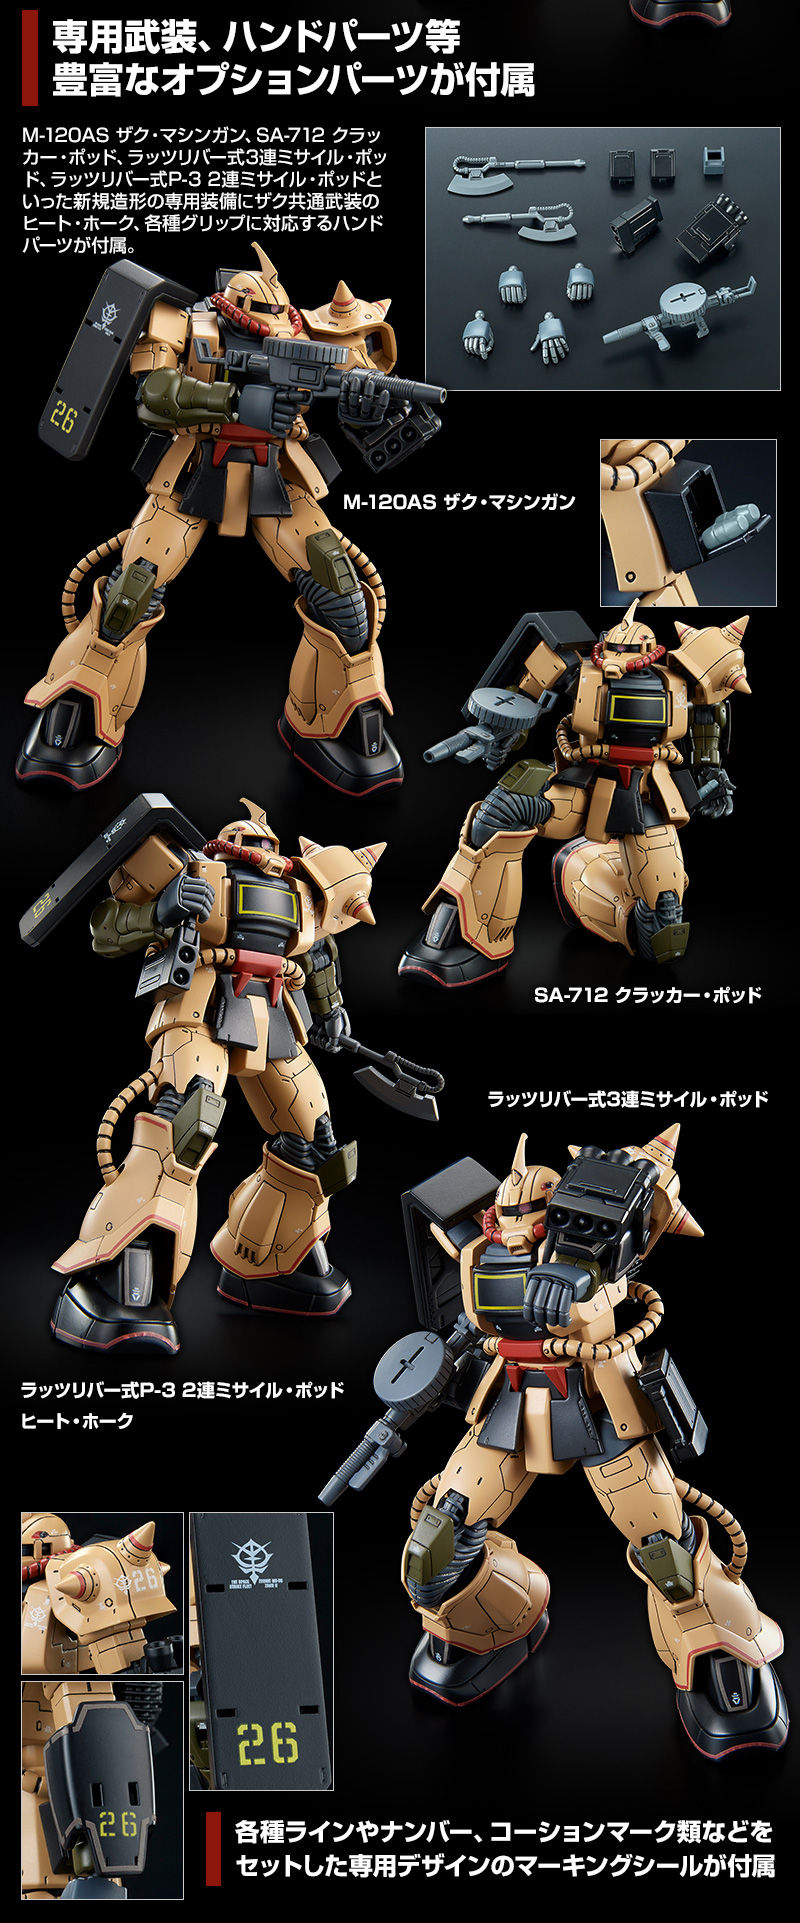 HGGTO 1/144 MS-06D Zaku Desert Type(Gundam The Origin)